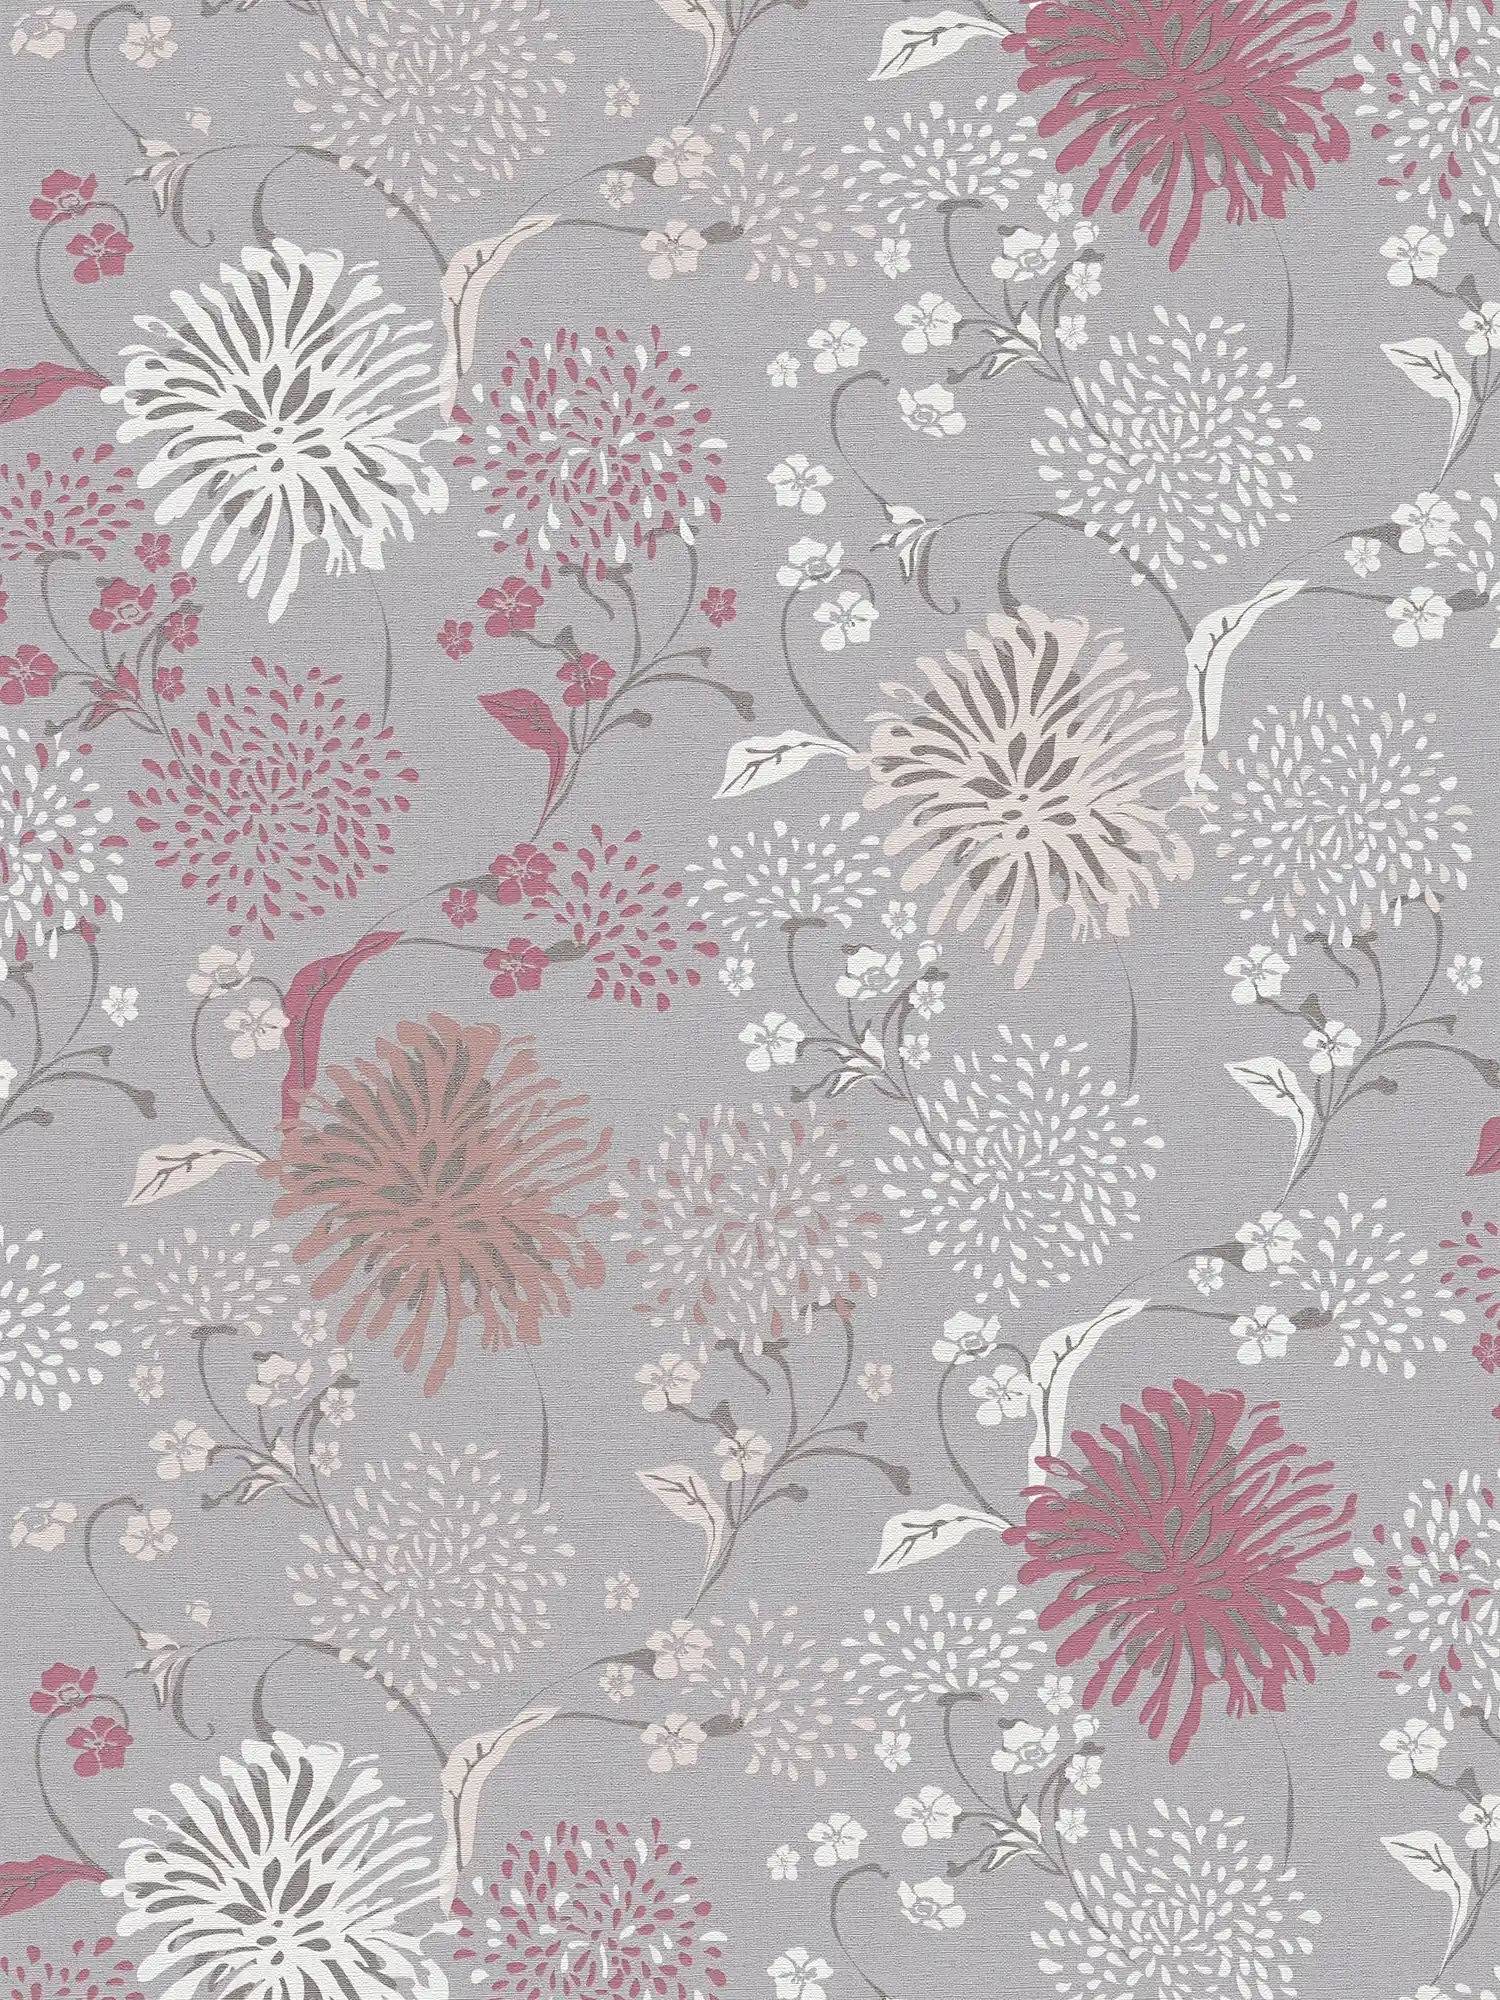 Dandelion wallpaper with fine linen look - grey, white, red
